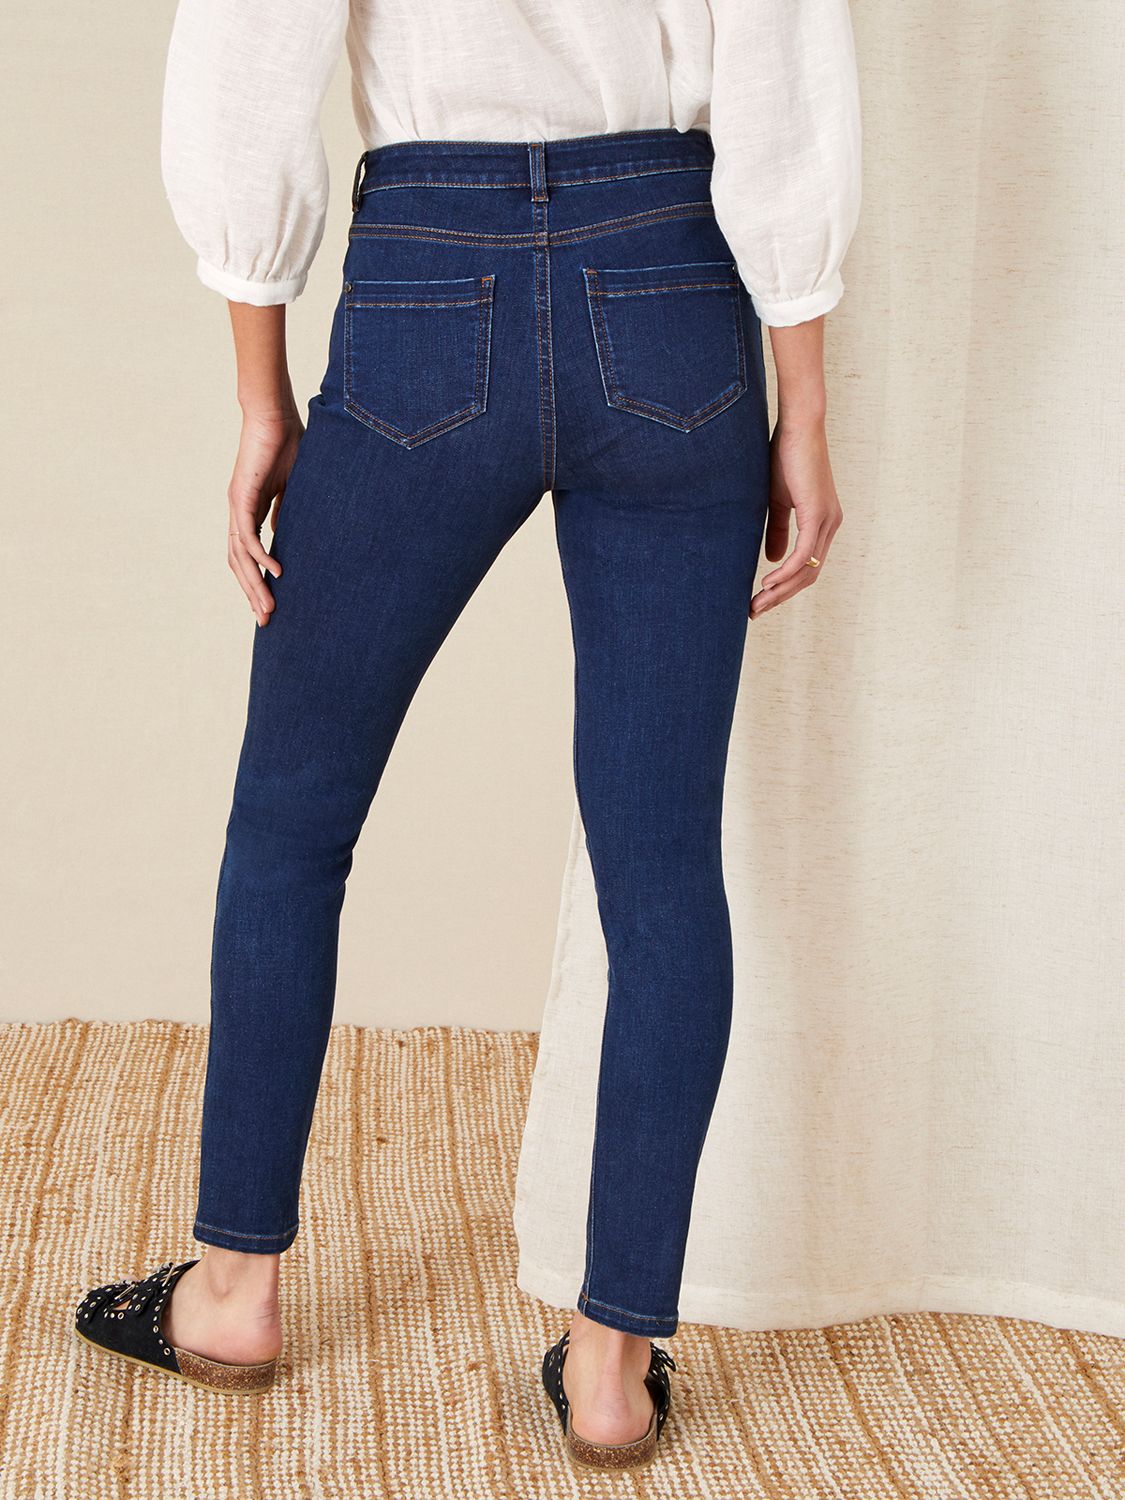 Buy Monsoon Iris Regular Length Skinny Jeans, Blue/Black Online at johnlewis.com